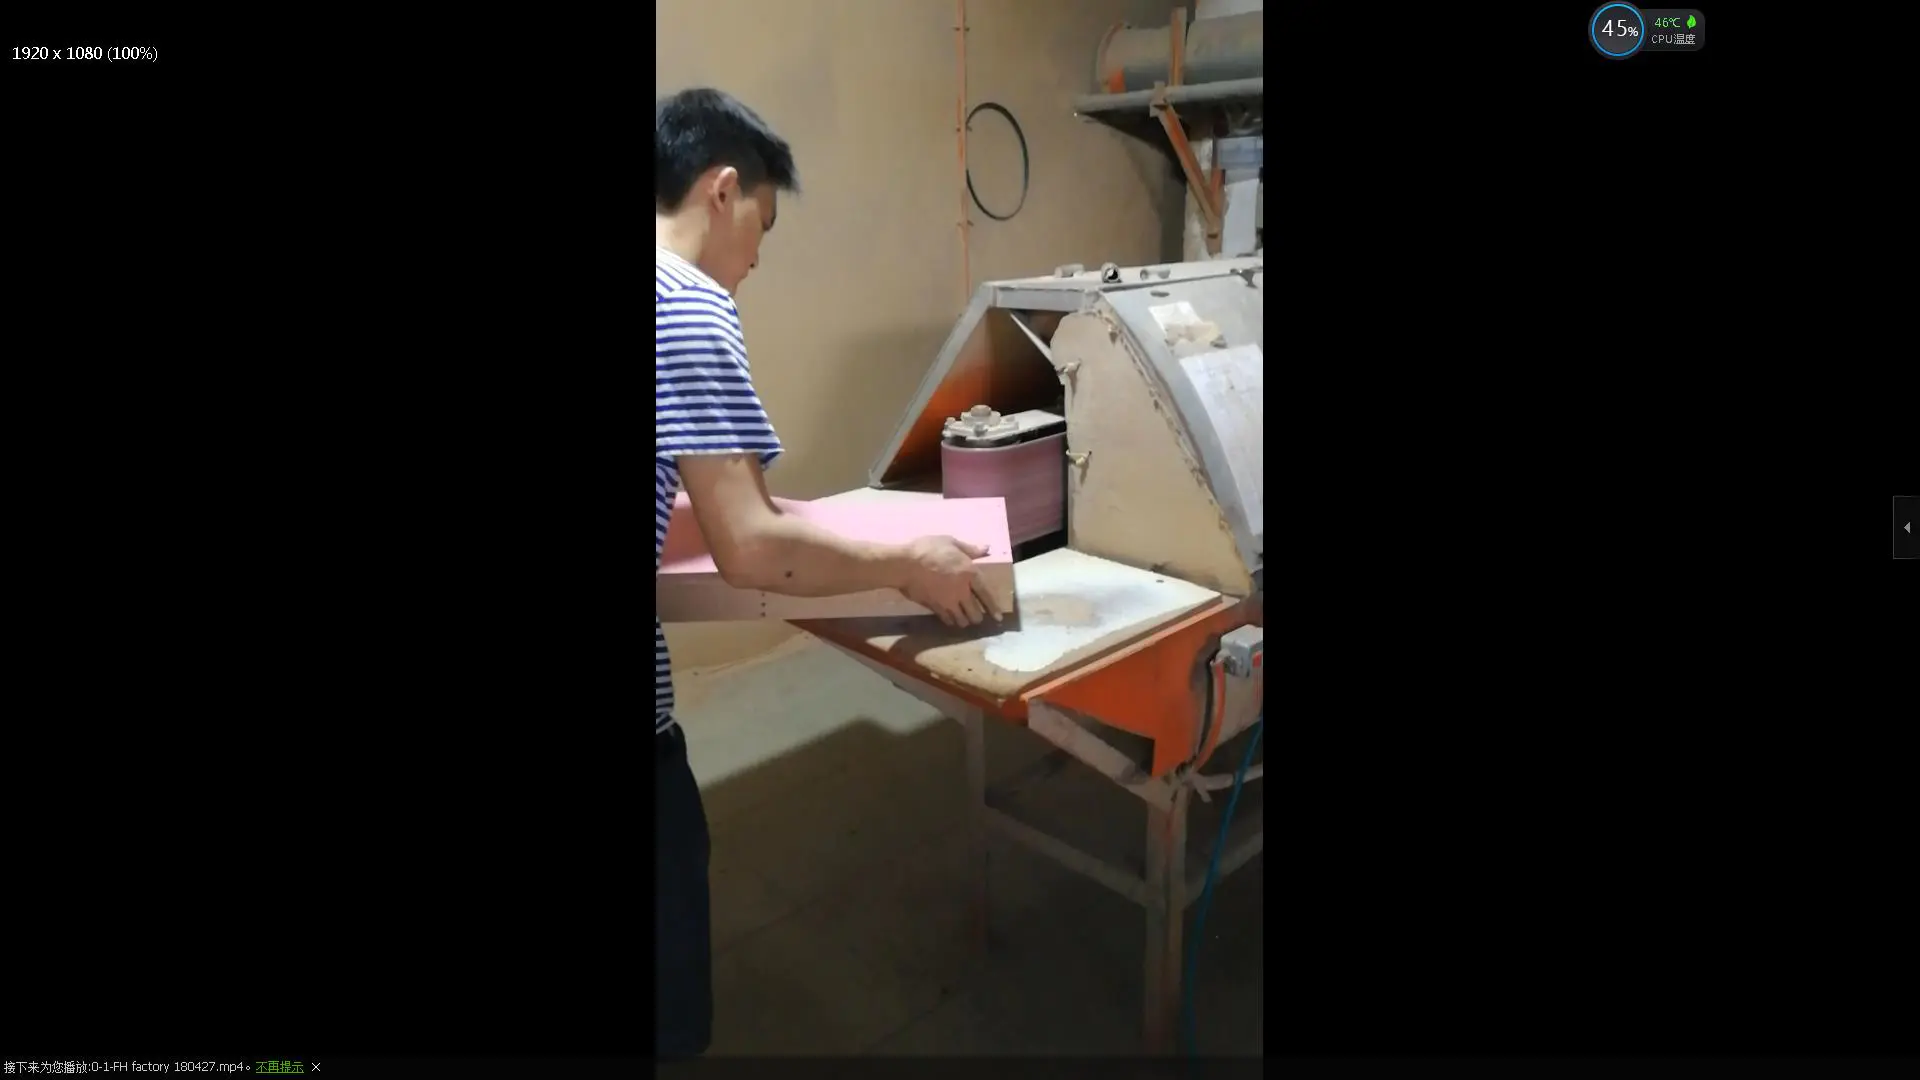 video of polishing